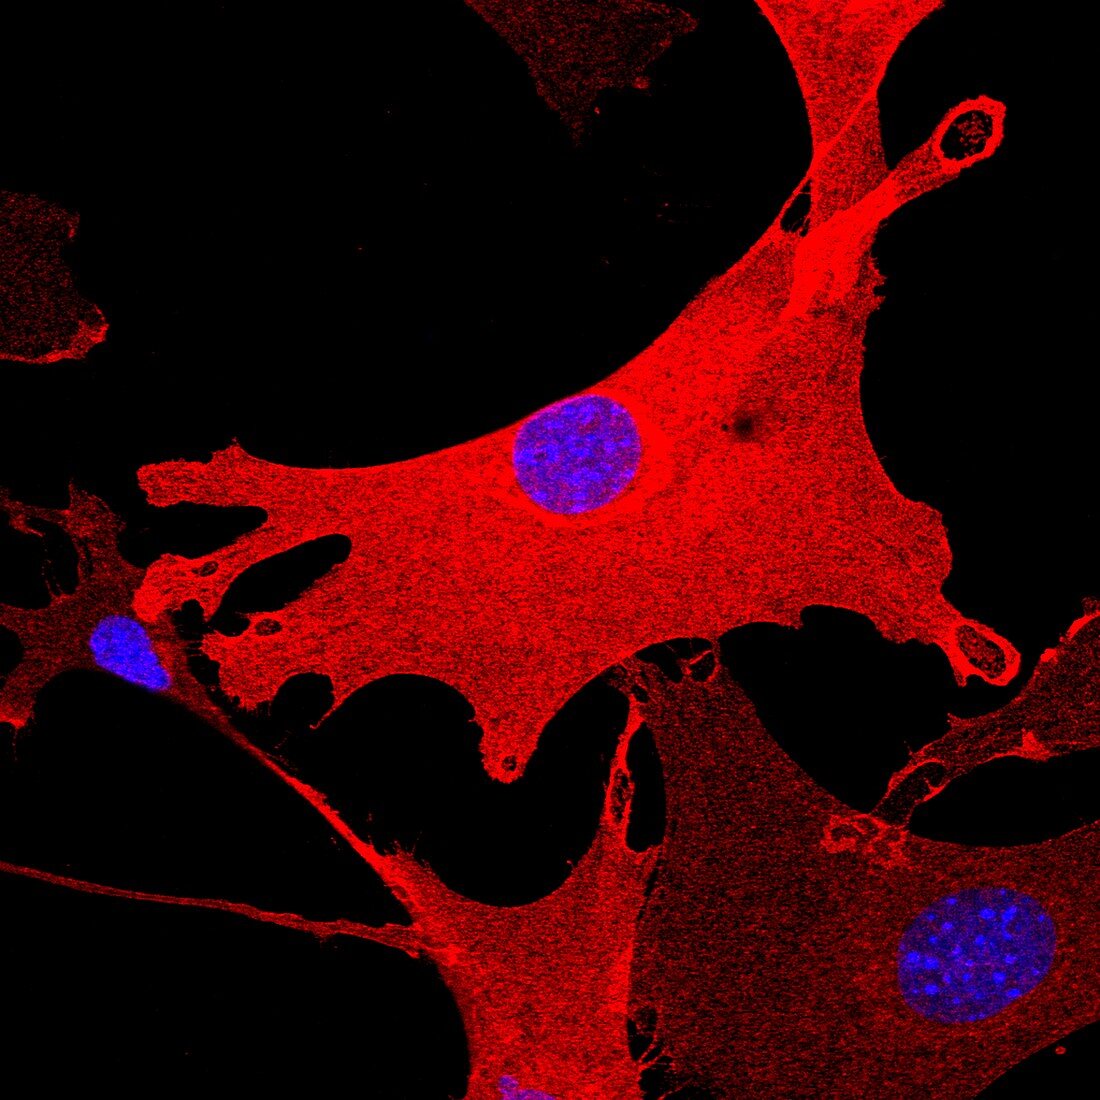 Cancer-associated fibroblasts, confocal light micrograph